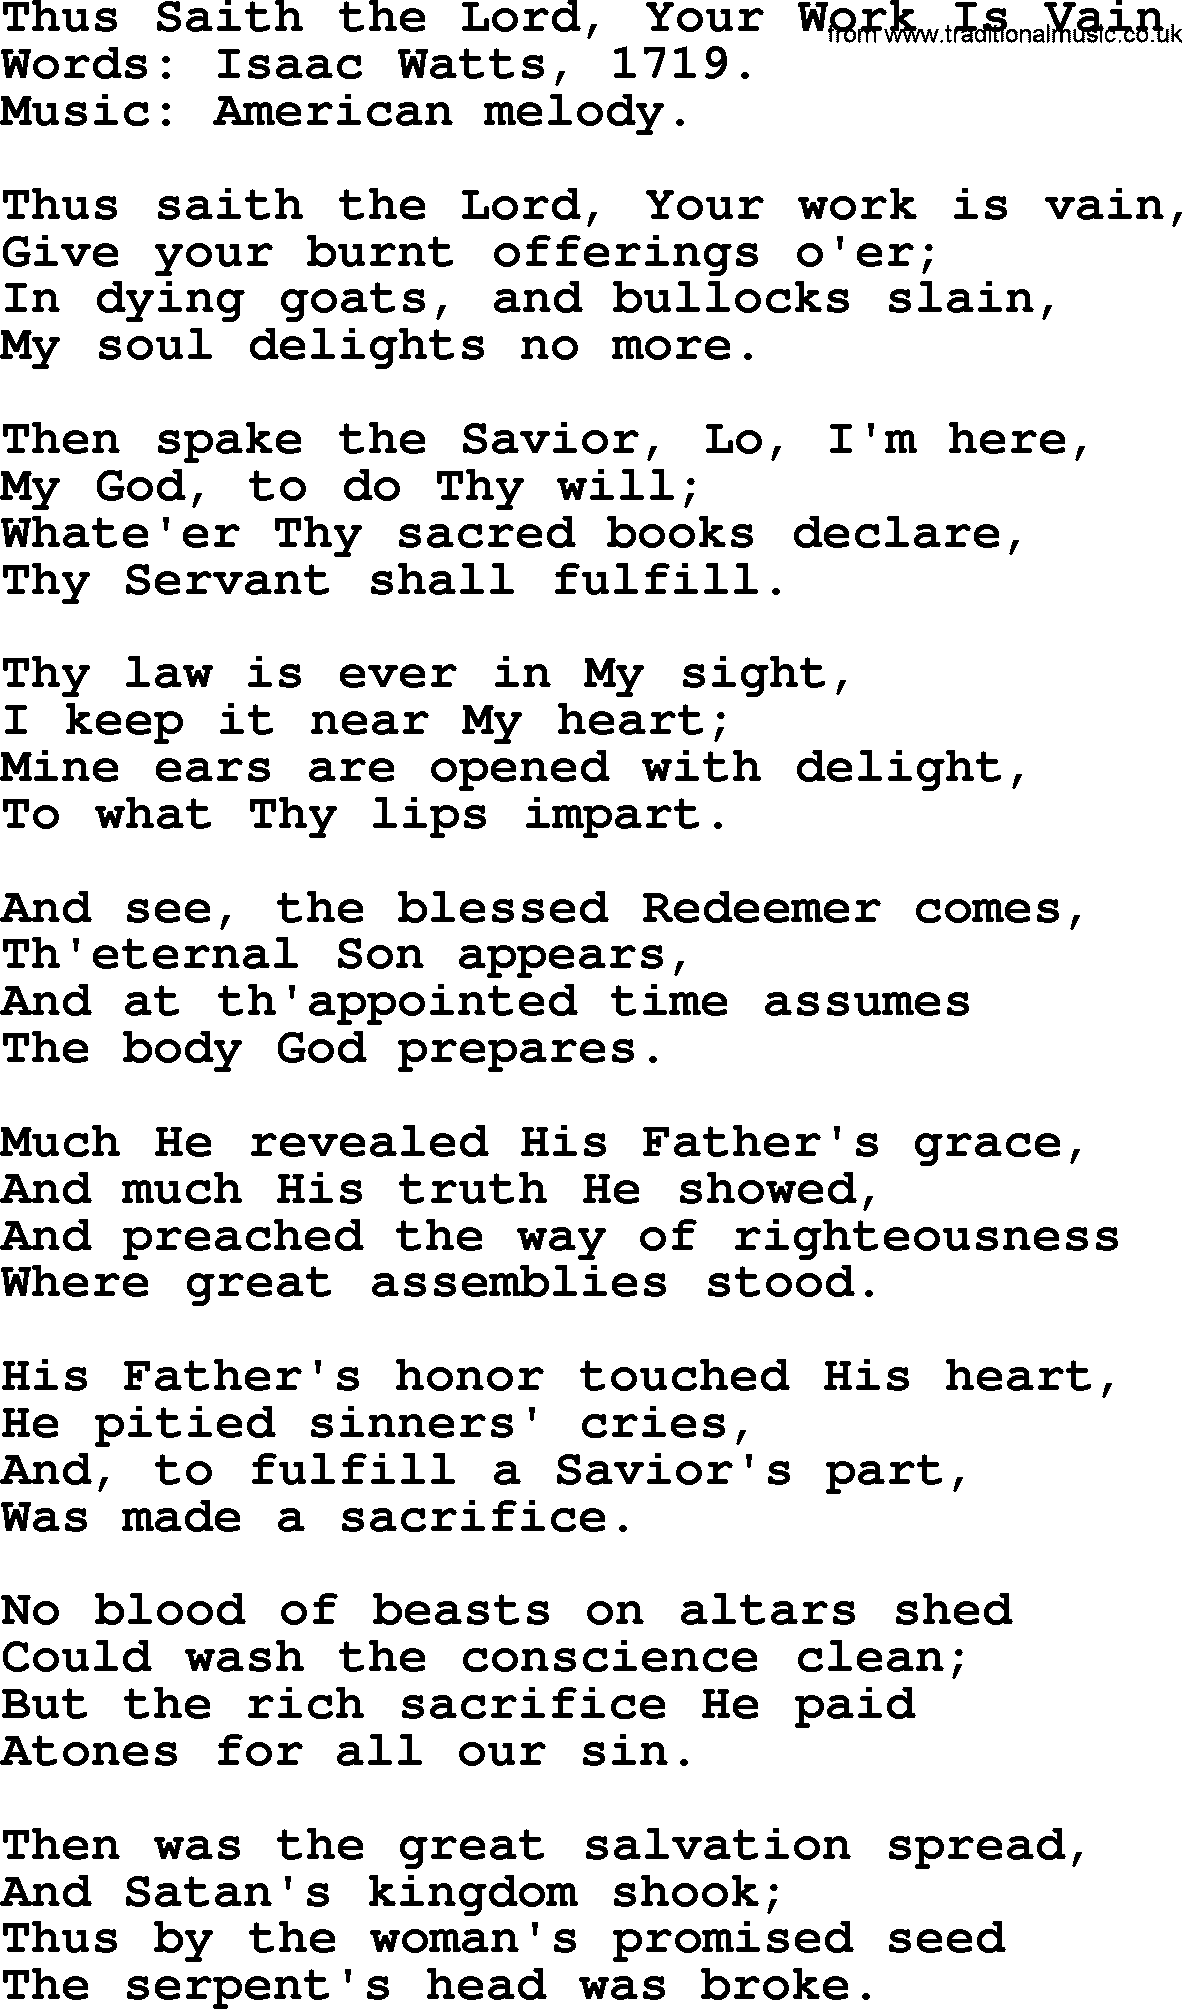 Isaac Watts Christian hymn: Thus Saith the Lord, Your Work Is Vain- lyricss